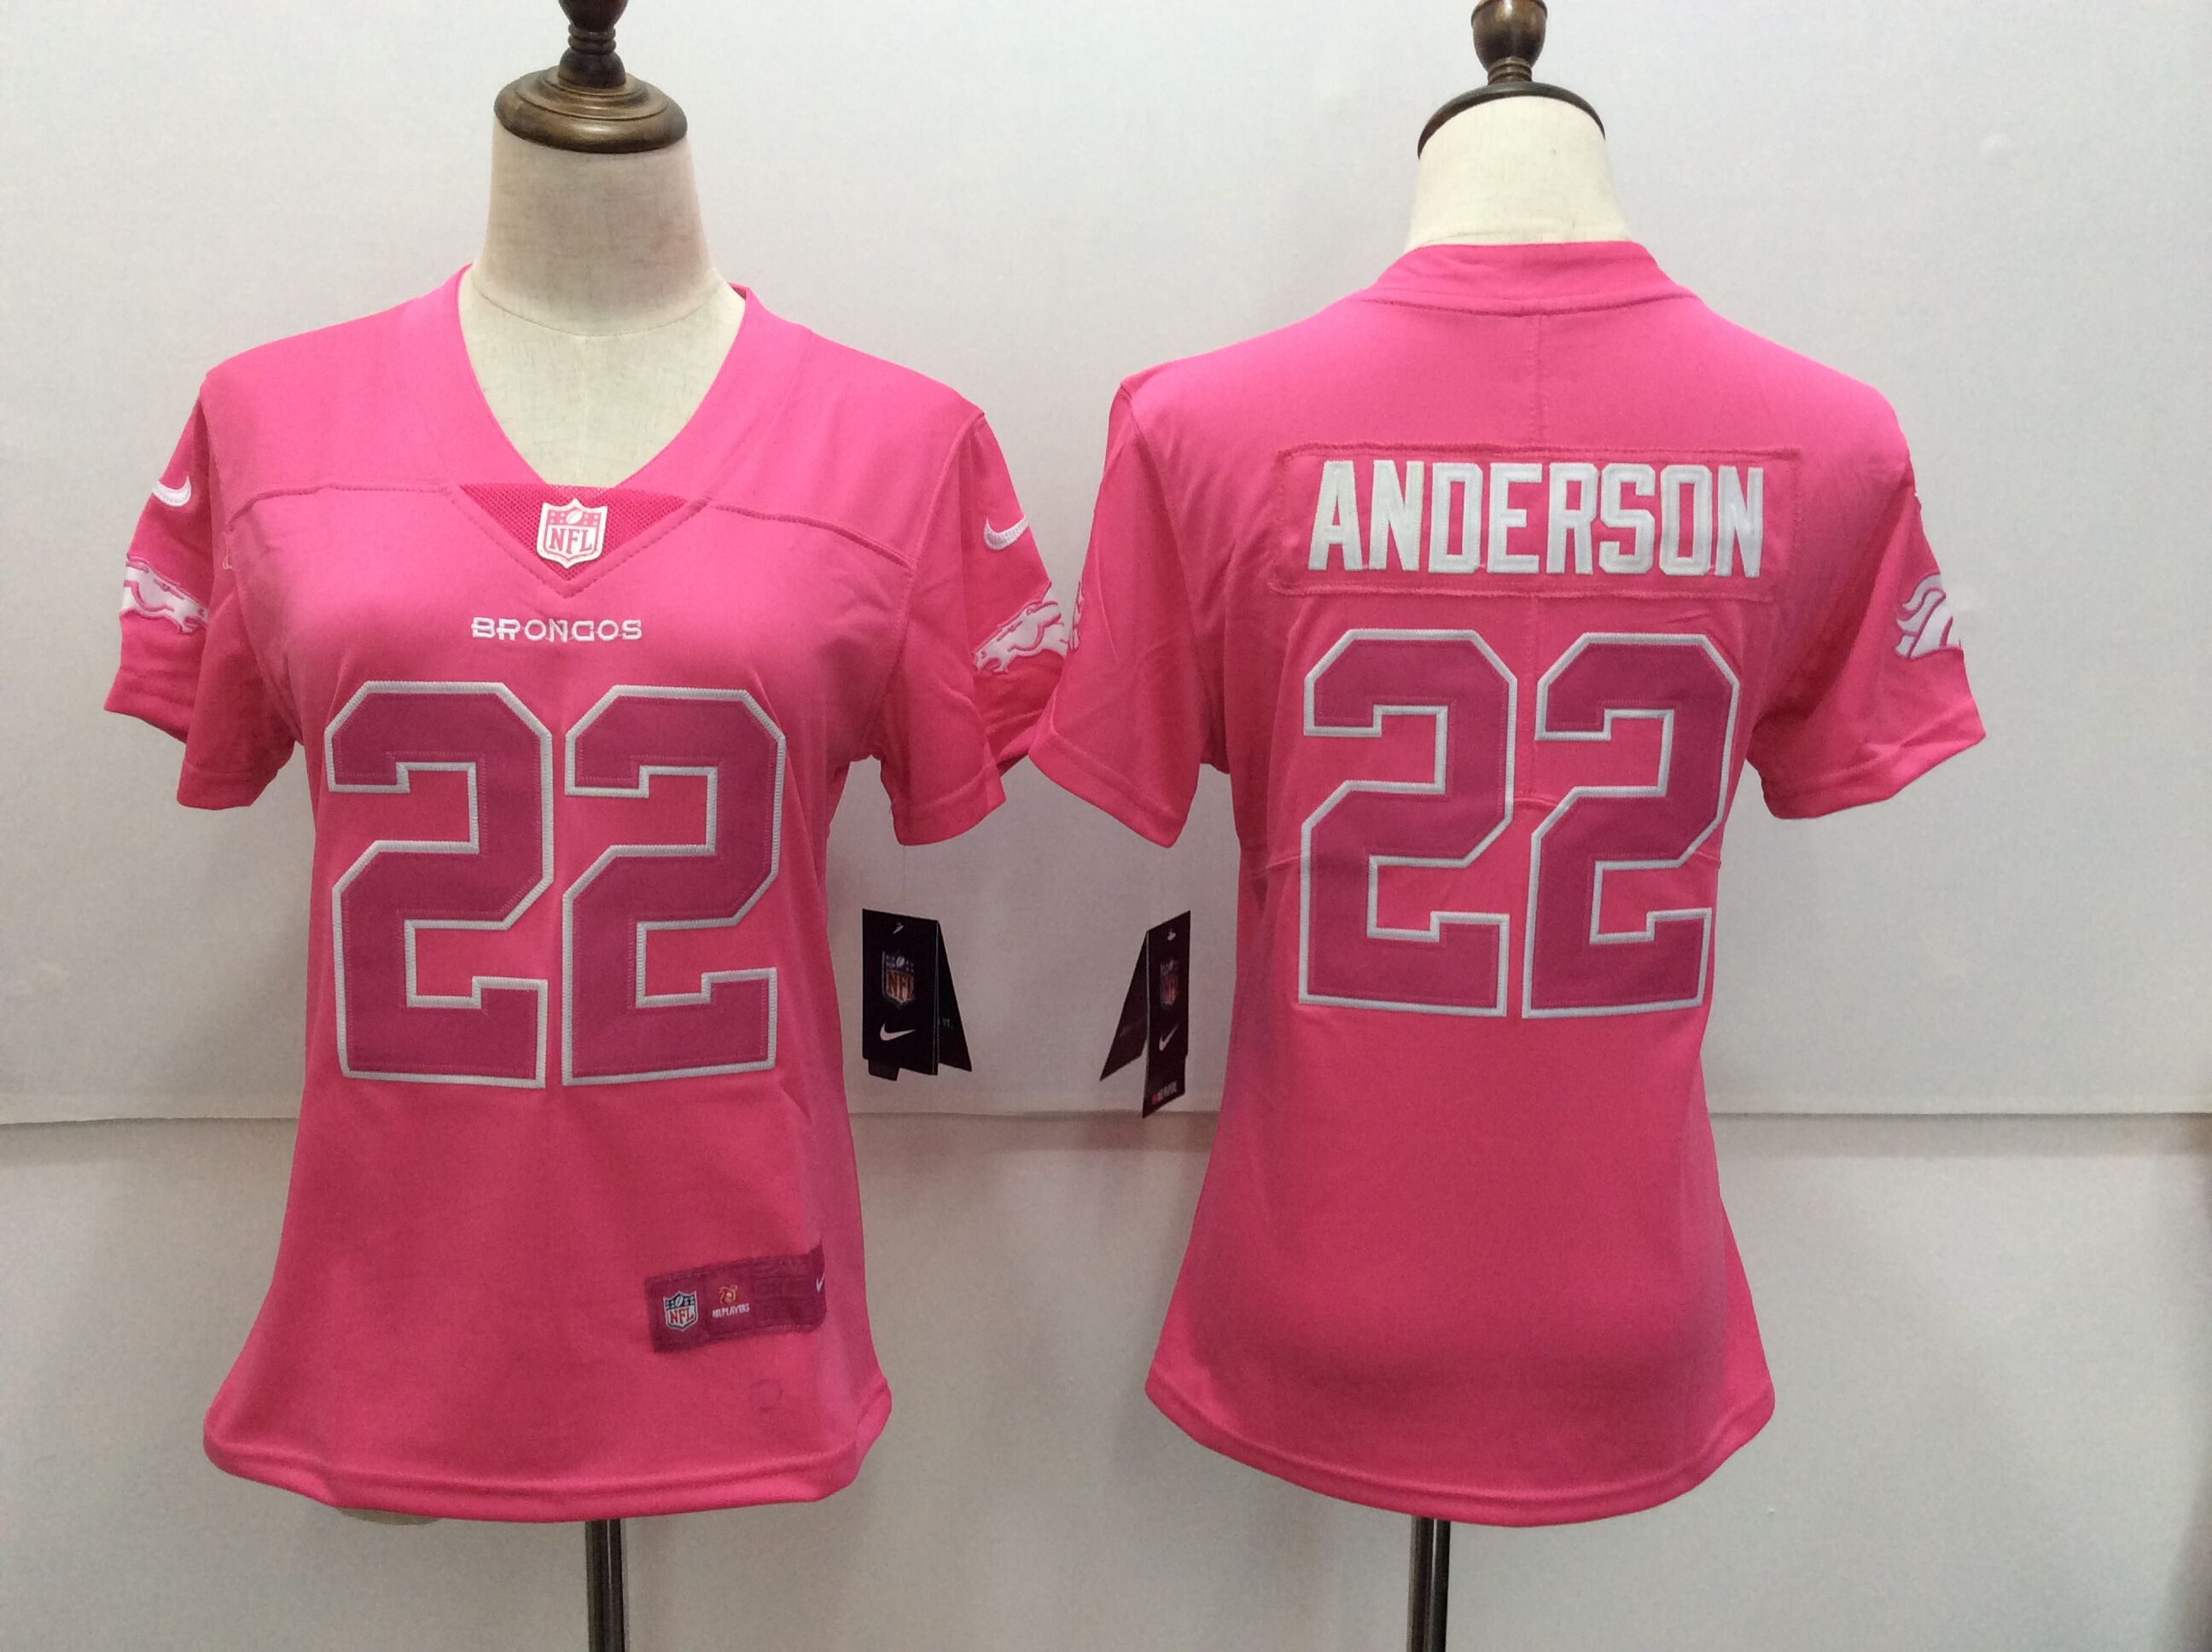 Womens NFL Denver Broncos #22 Anderson Pink Jersey